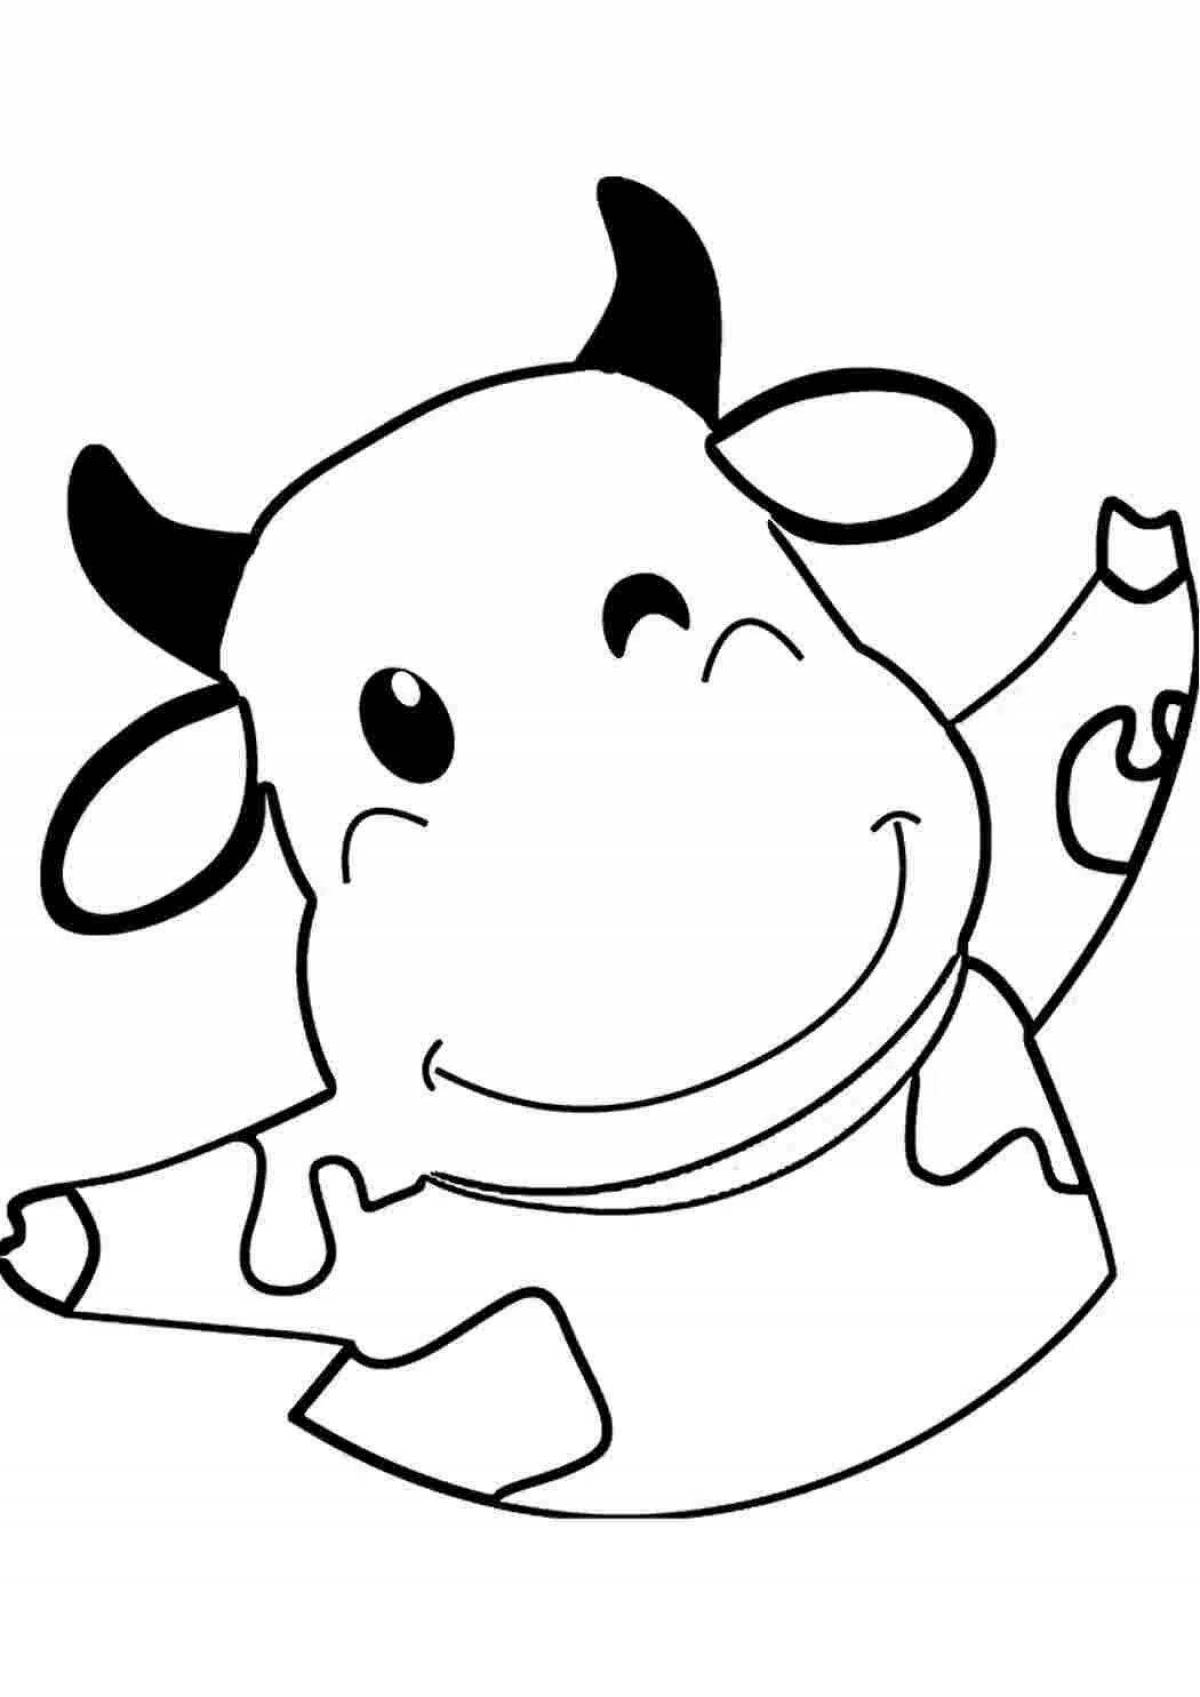 Adorable cow print coloring book